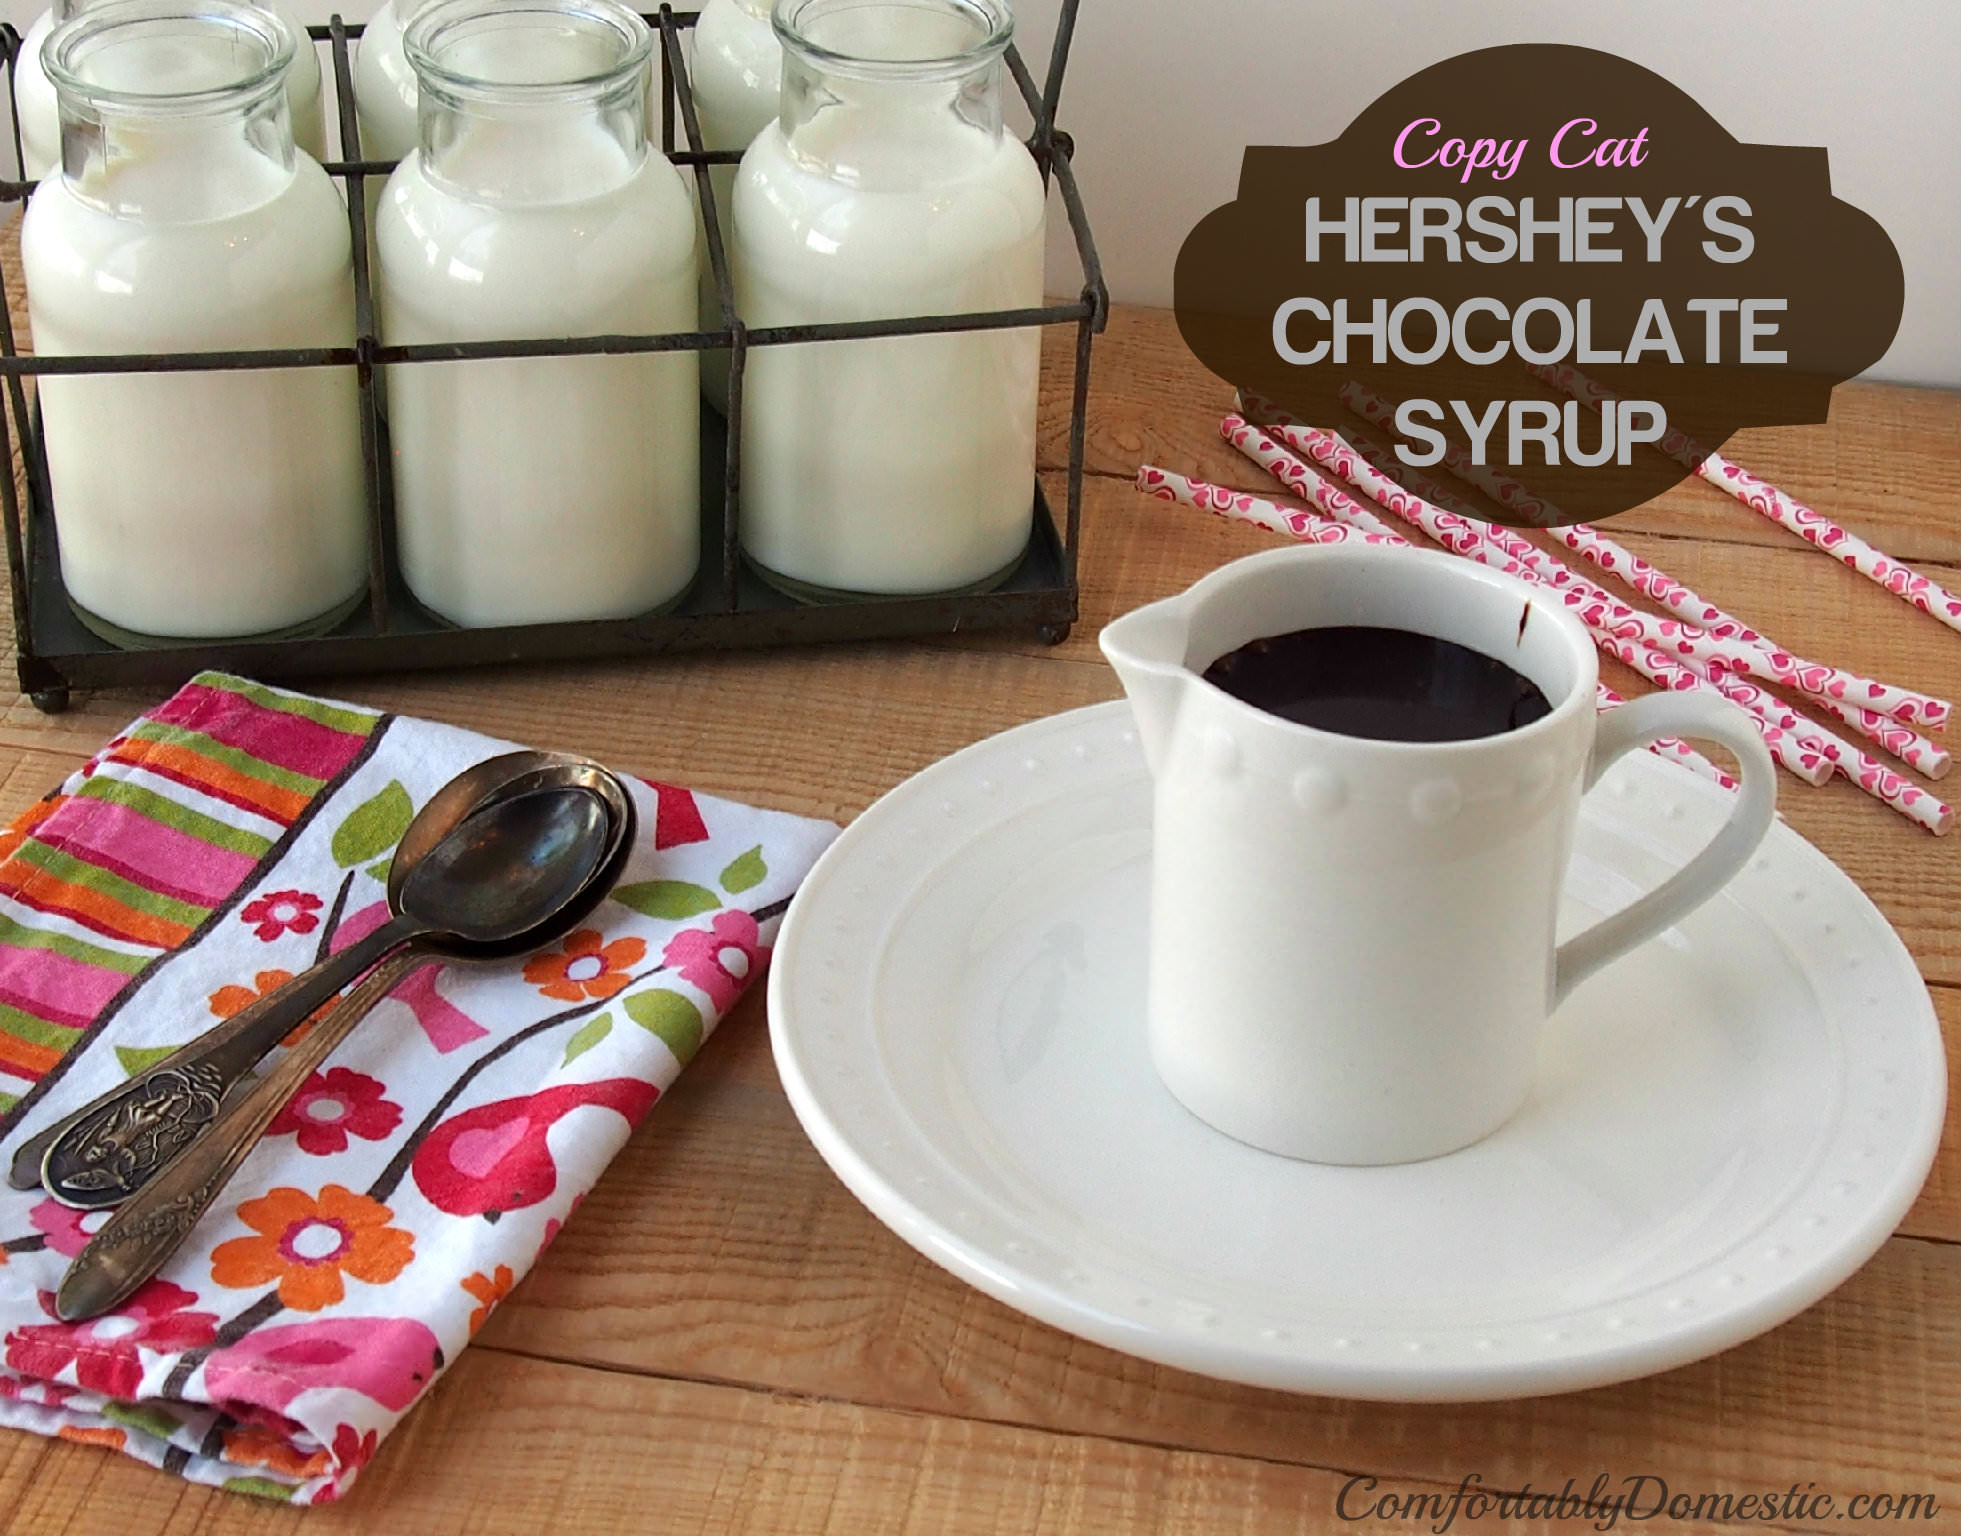 Copy Cat Hershey's Chocolate Syrup | ComfortablyDomestic.com